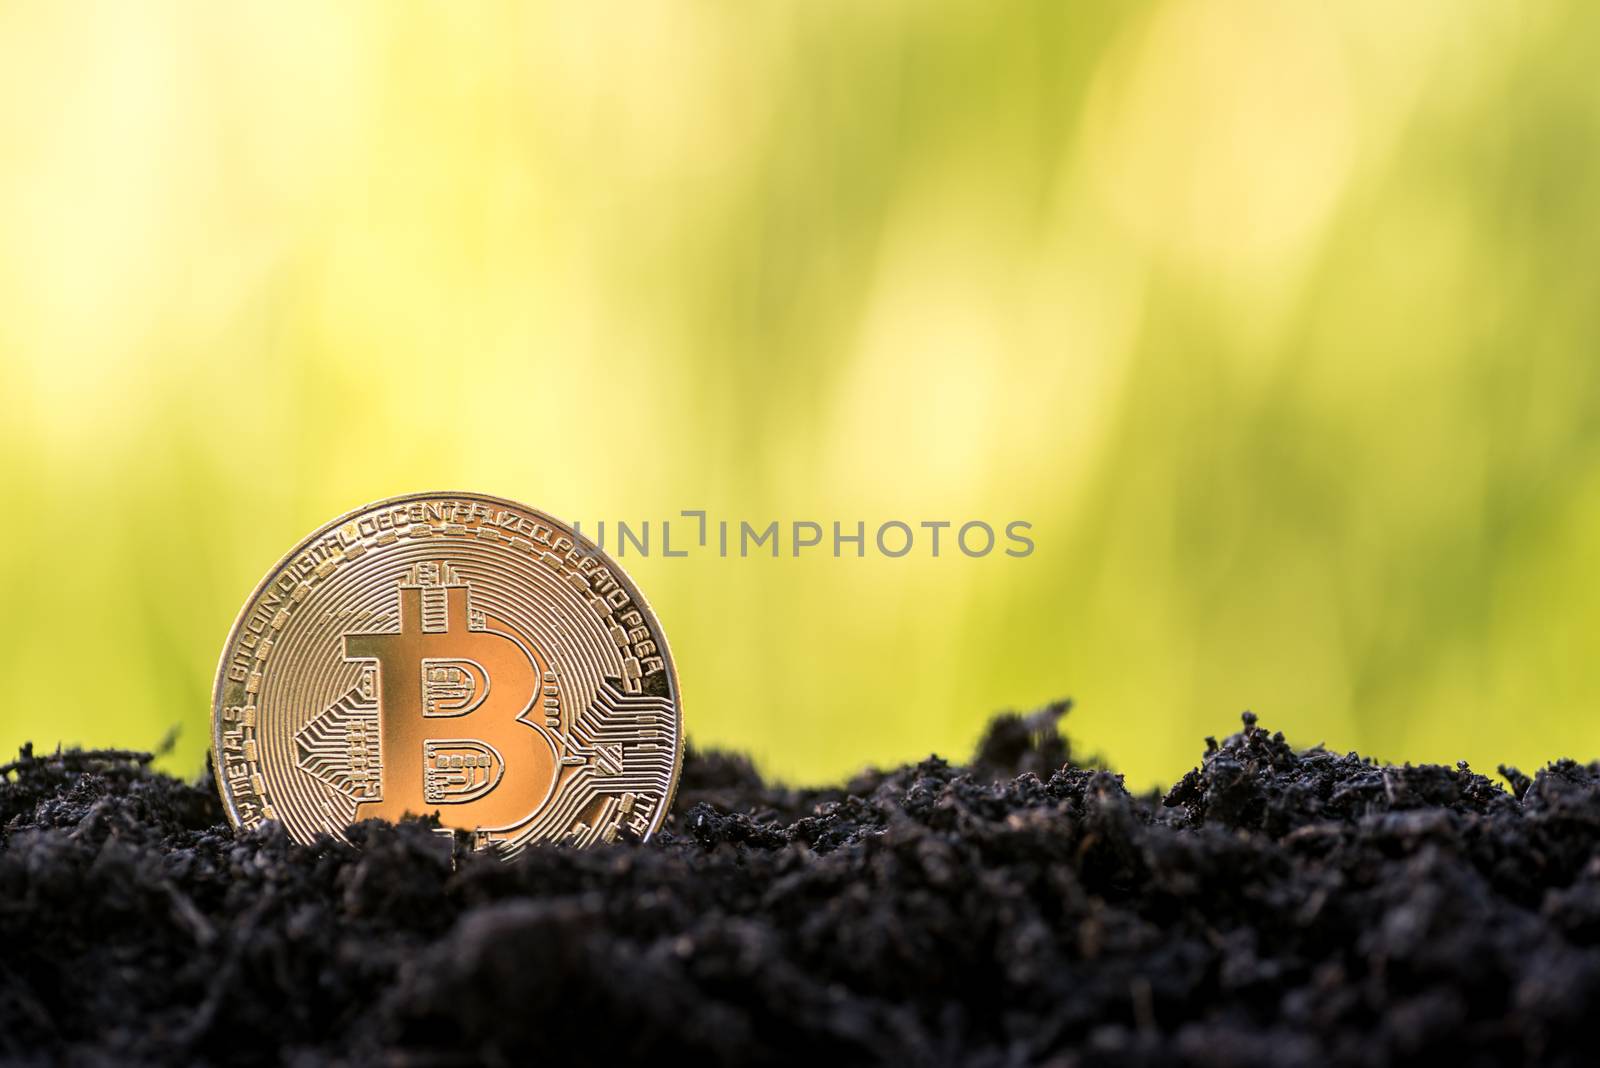 gold bitcoin grow from soil